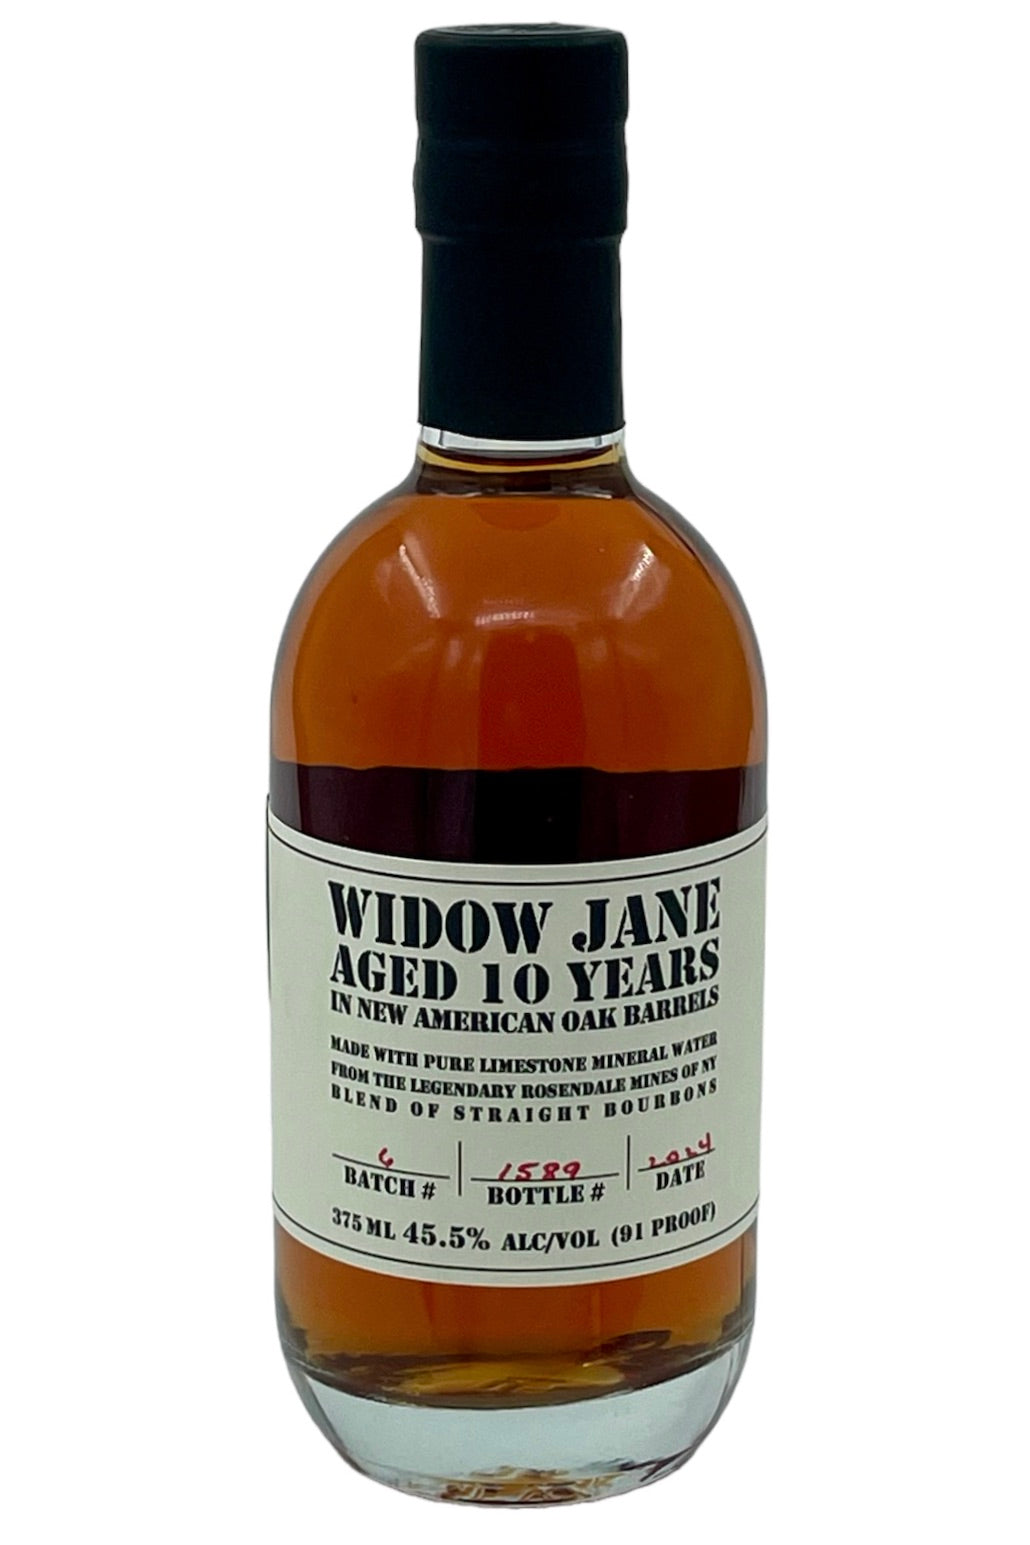 Widow Jane 10 Year old Bourbon Whiskey 375 ml